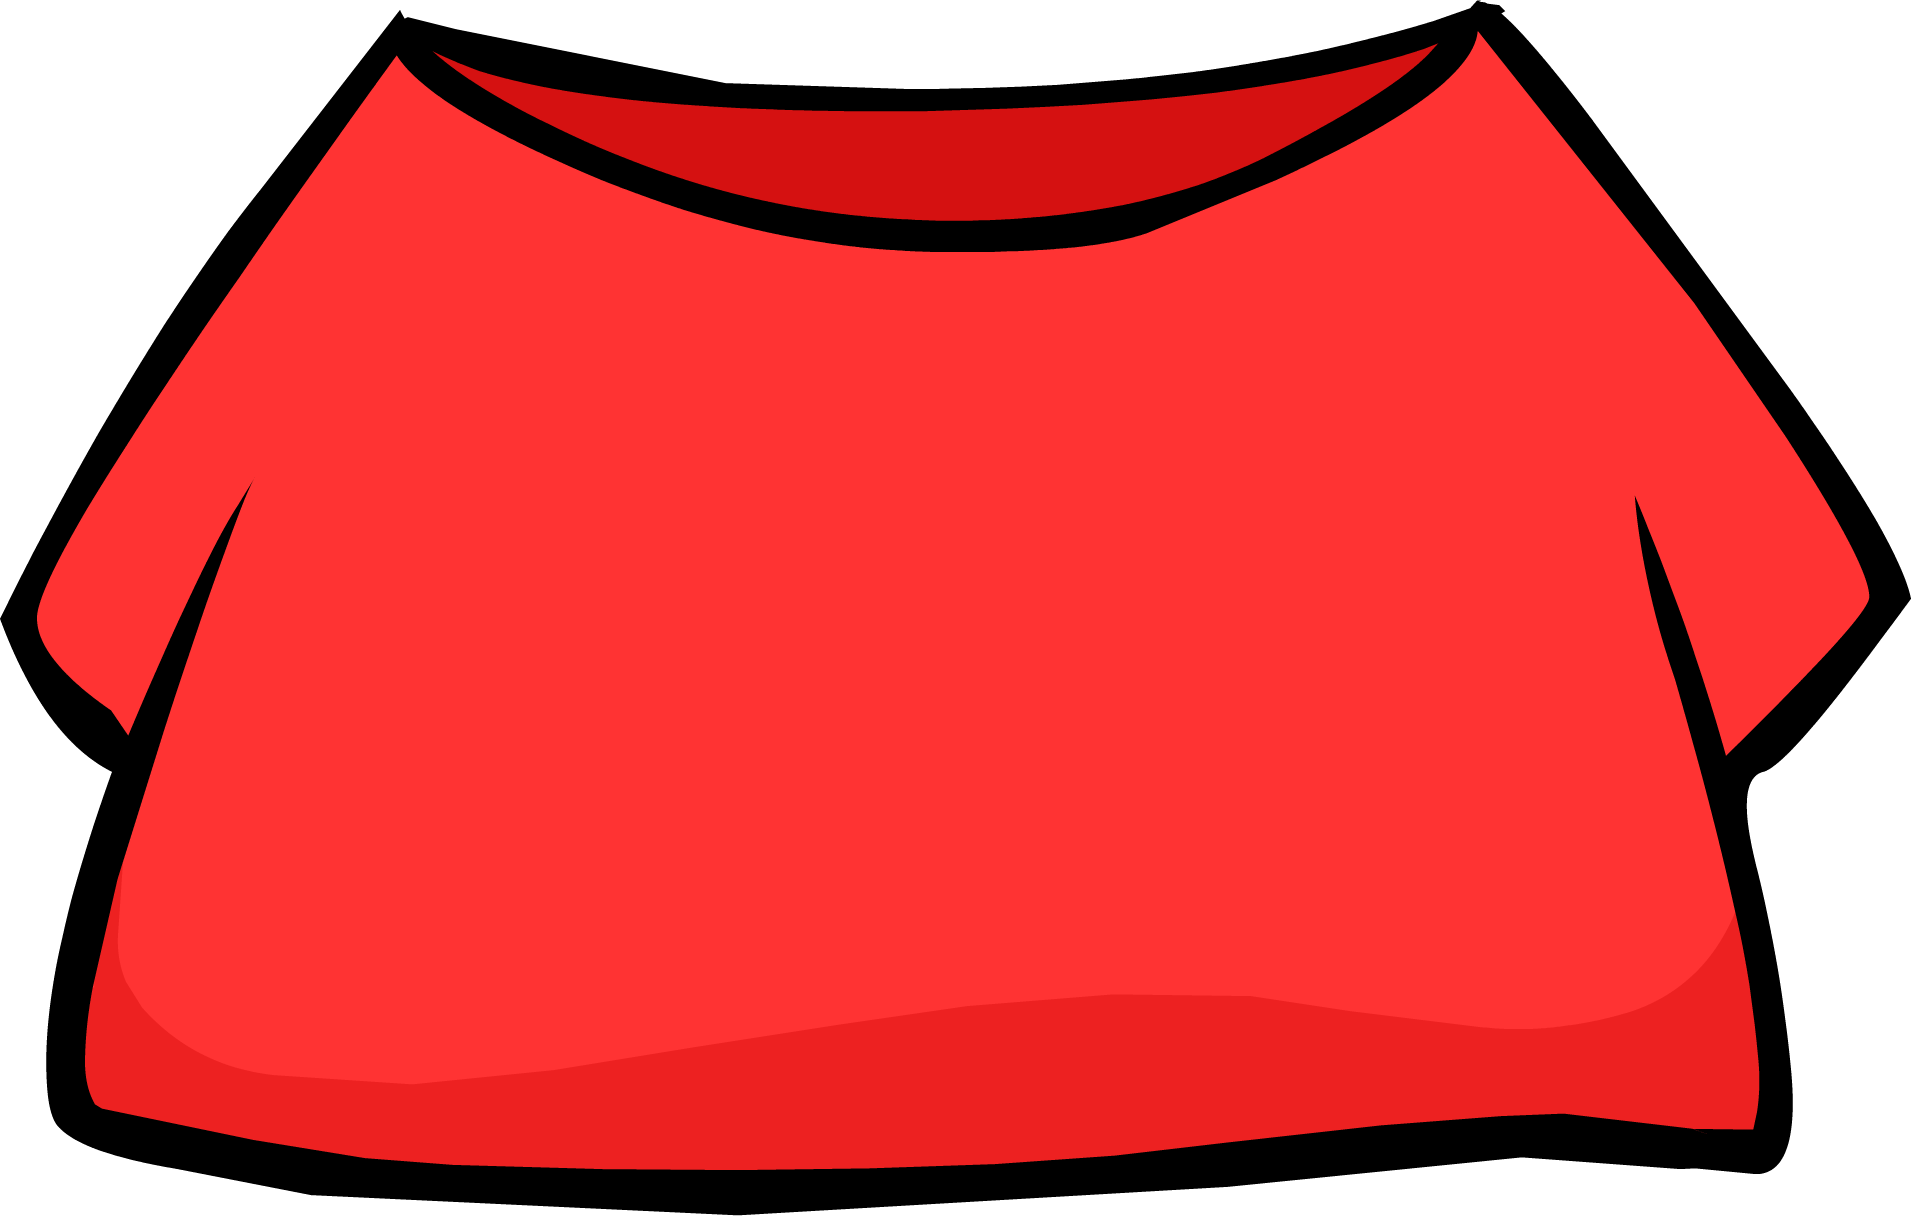 Red Shirt - Club Penguin Red Shirt (1911x1216)